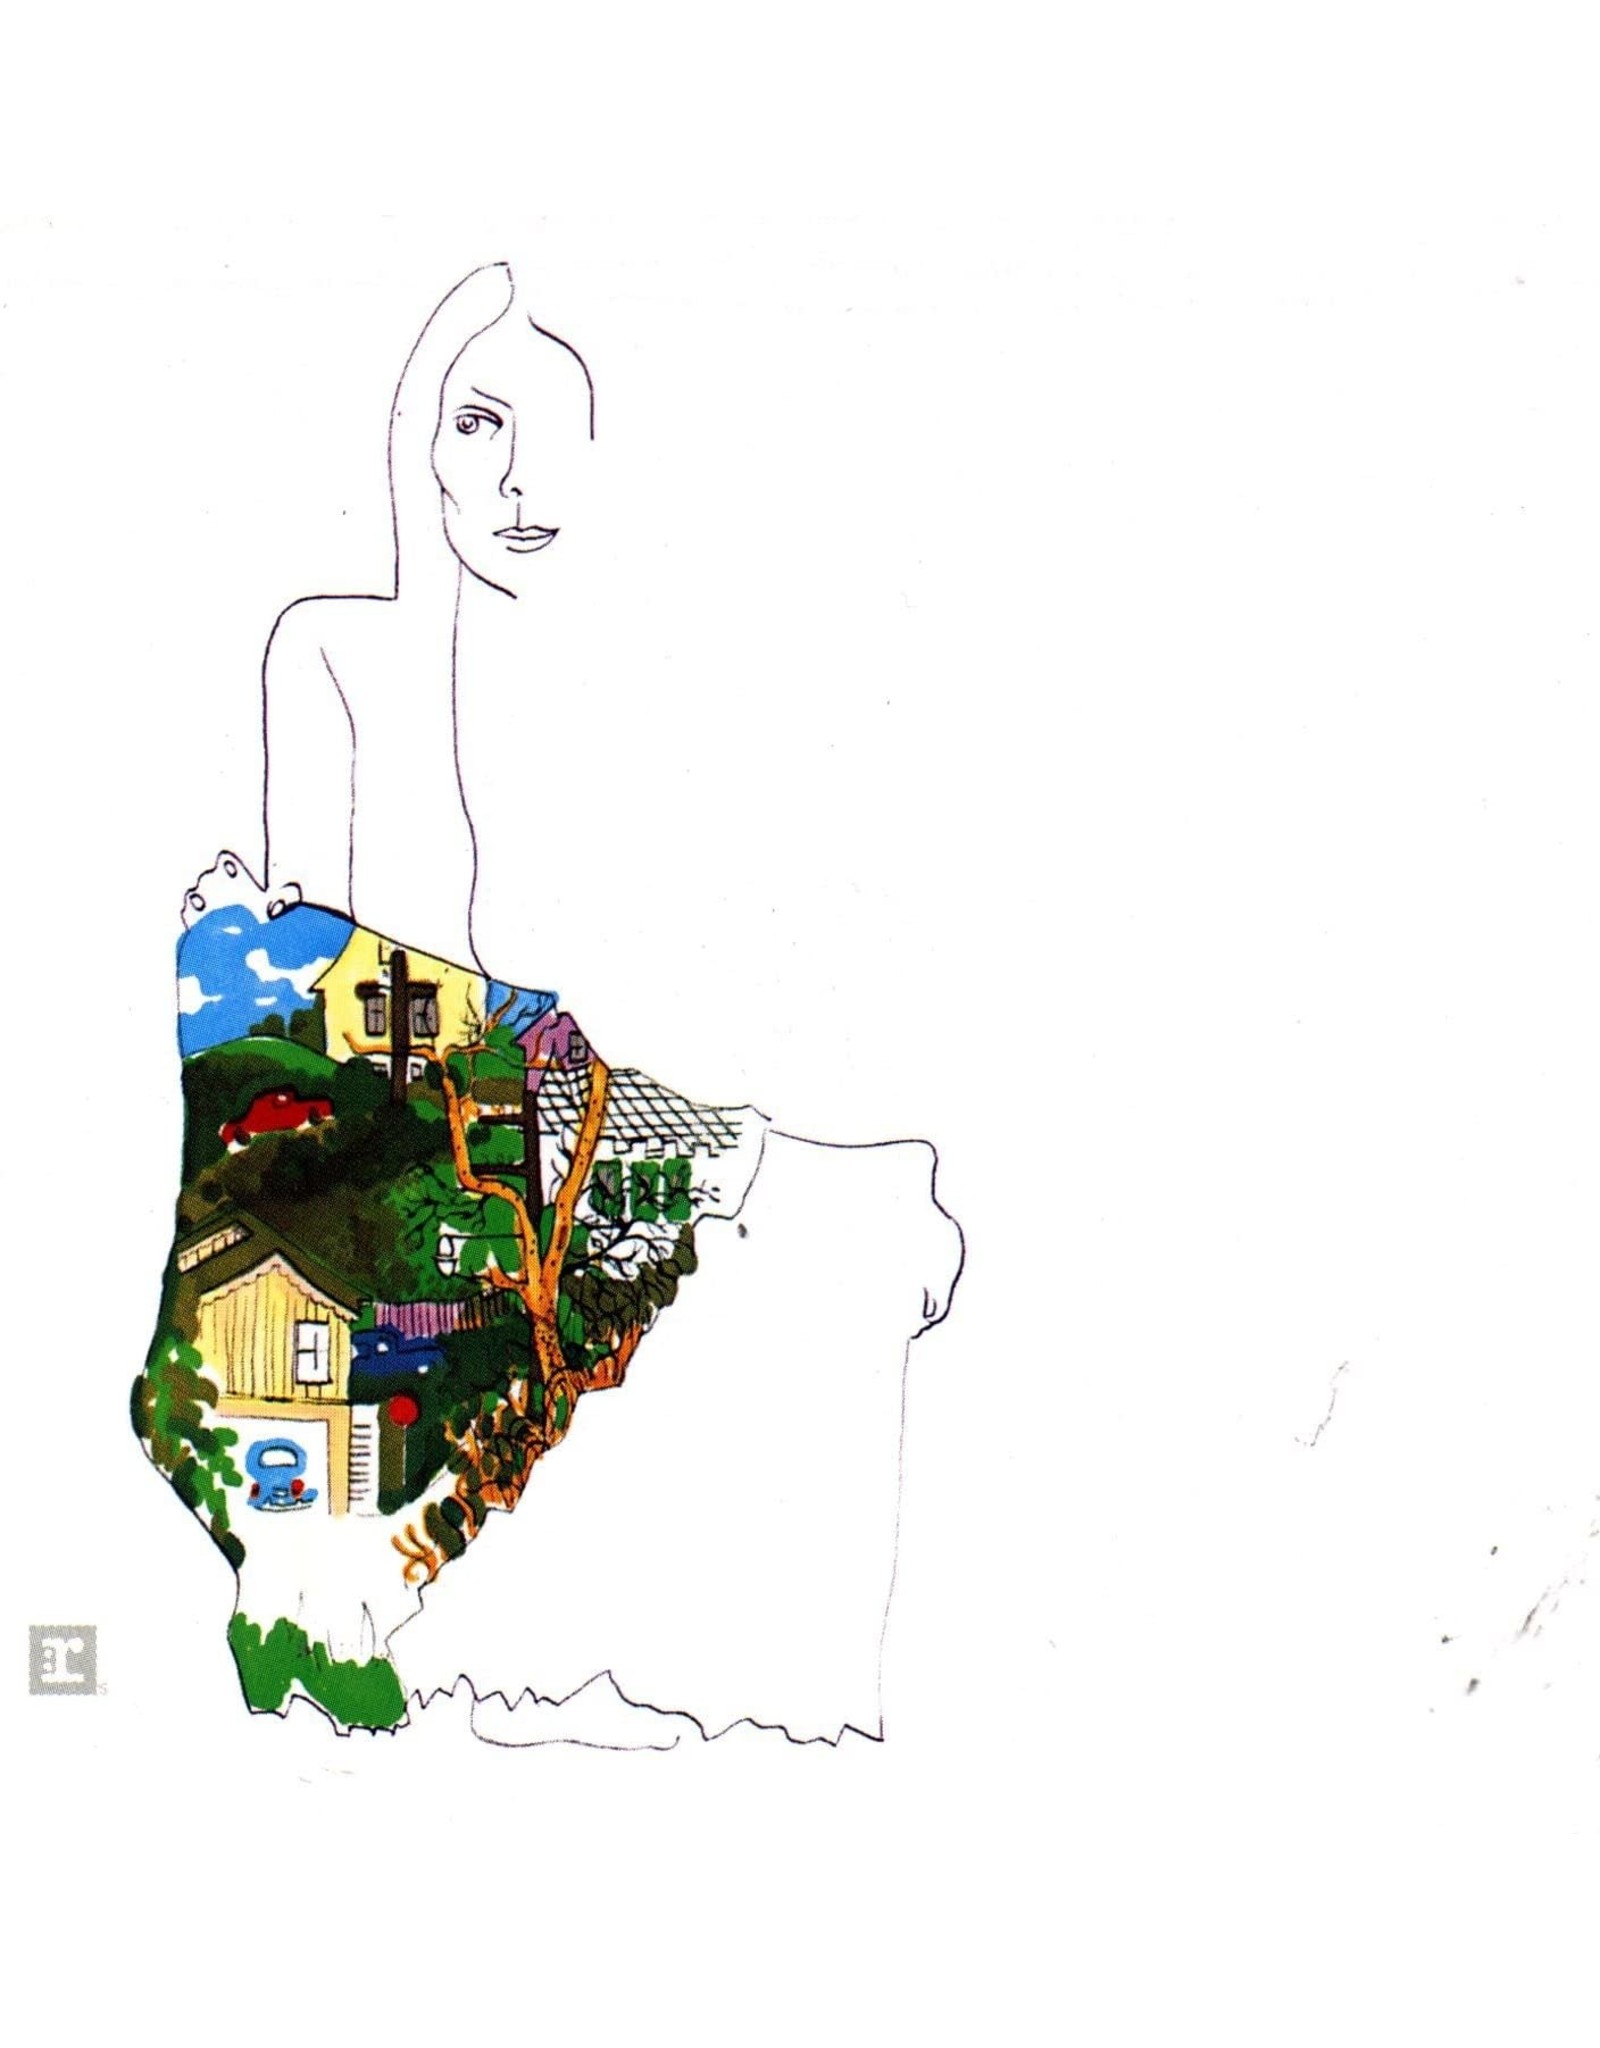 Joni Mitchell - Ladies of the Canyon (Exclusive Green Vinyl)